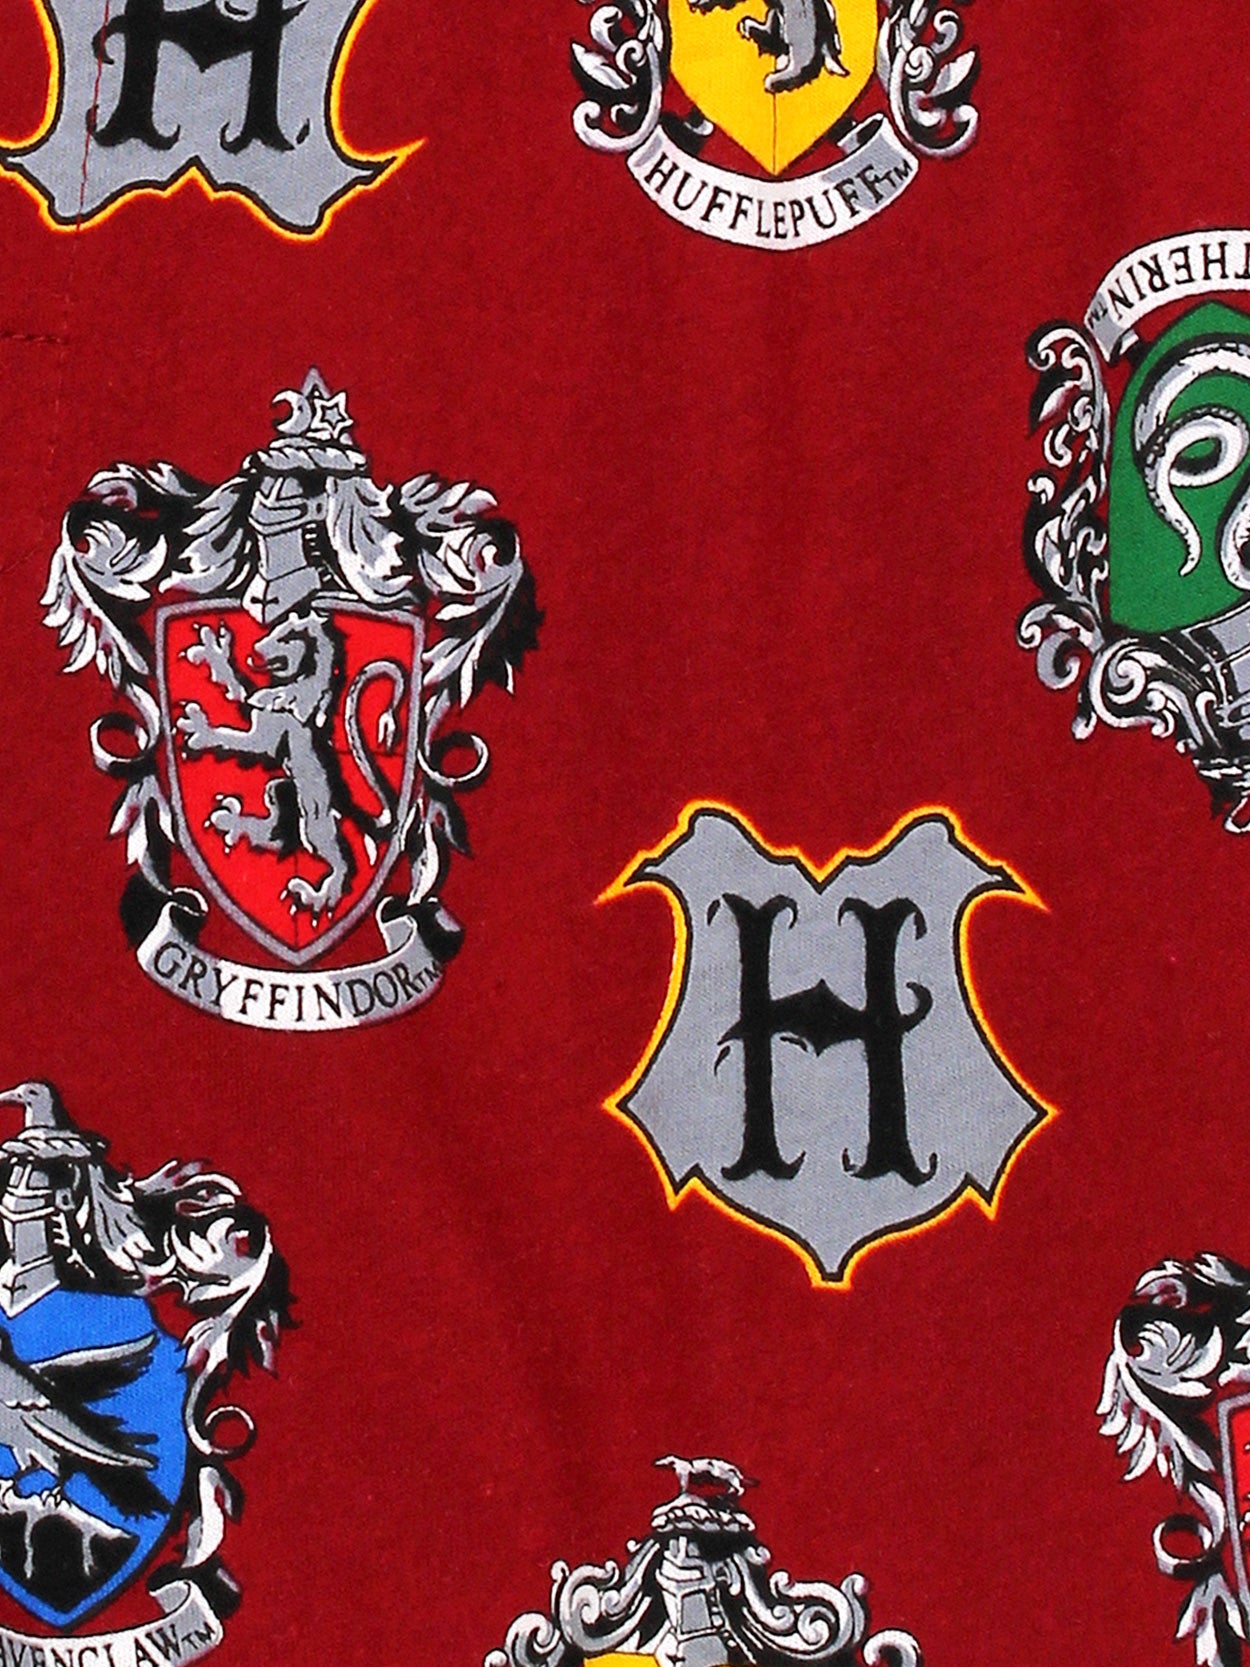 Harry Potter Boys 5-Pack Boxer Briefs, Sizes 4-8, Hogwarts Houses, 100%  Cotton